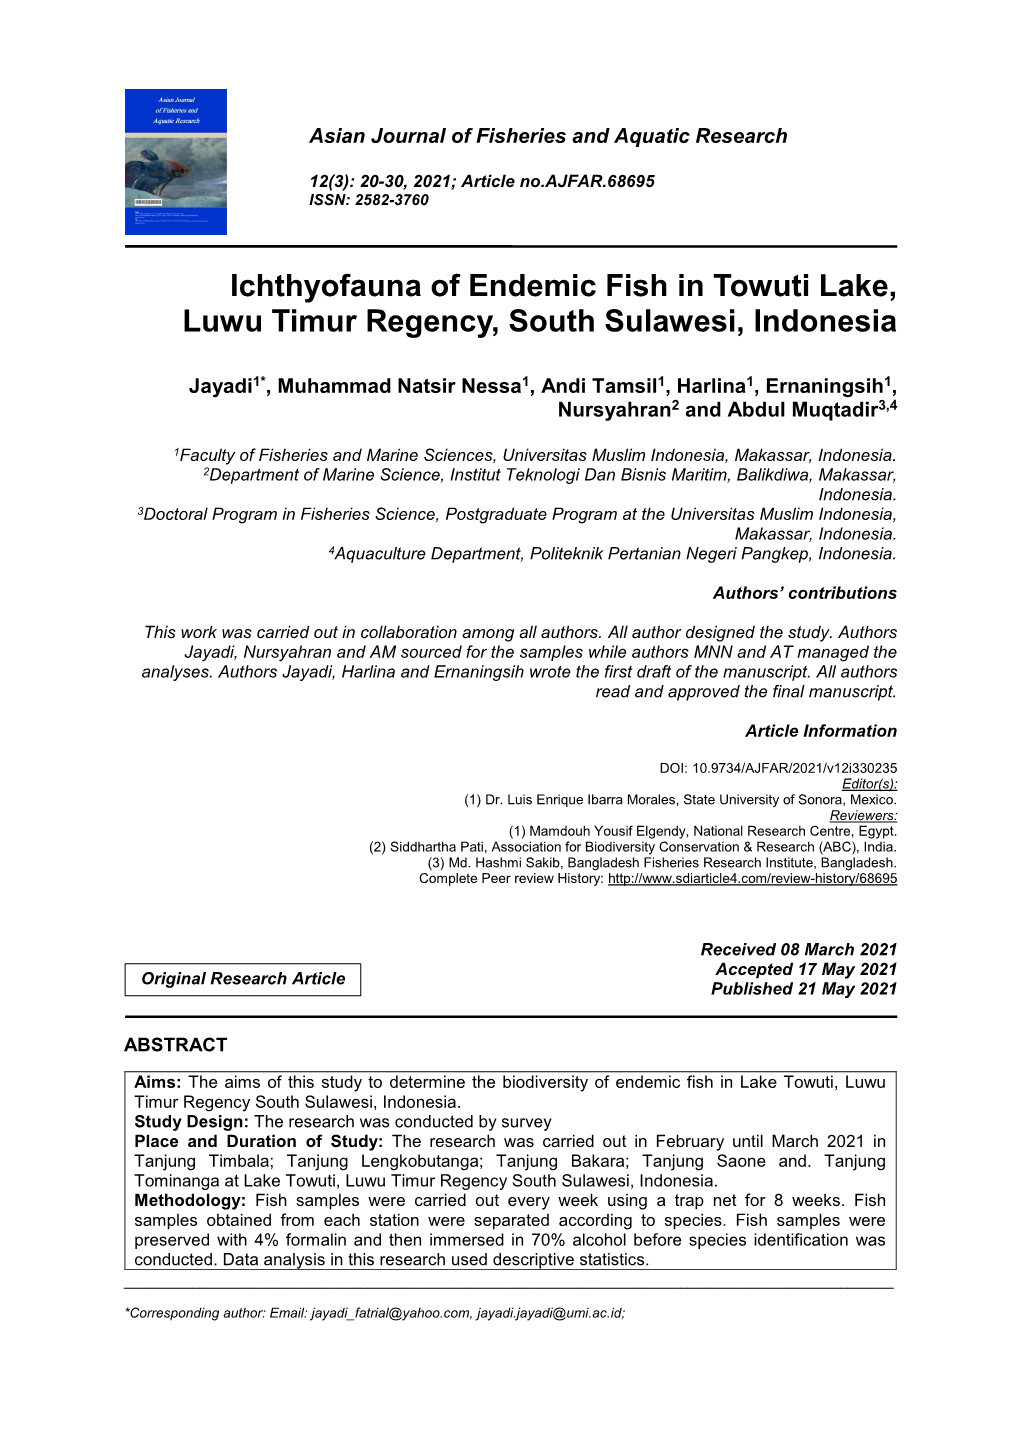 Ichthyofauna of Endemic Fish in Towuti Lake, Luwu Timur Regency, South Sulawesi, Indonesia